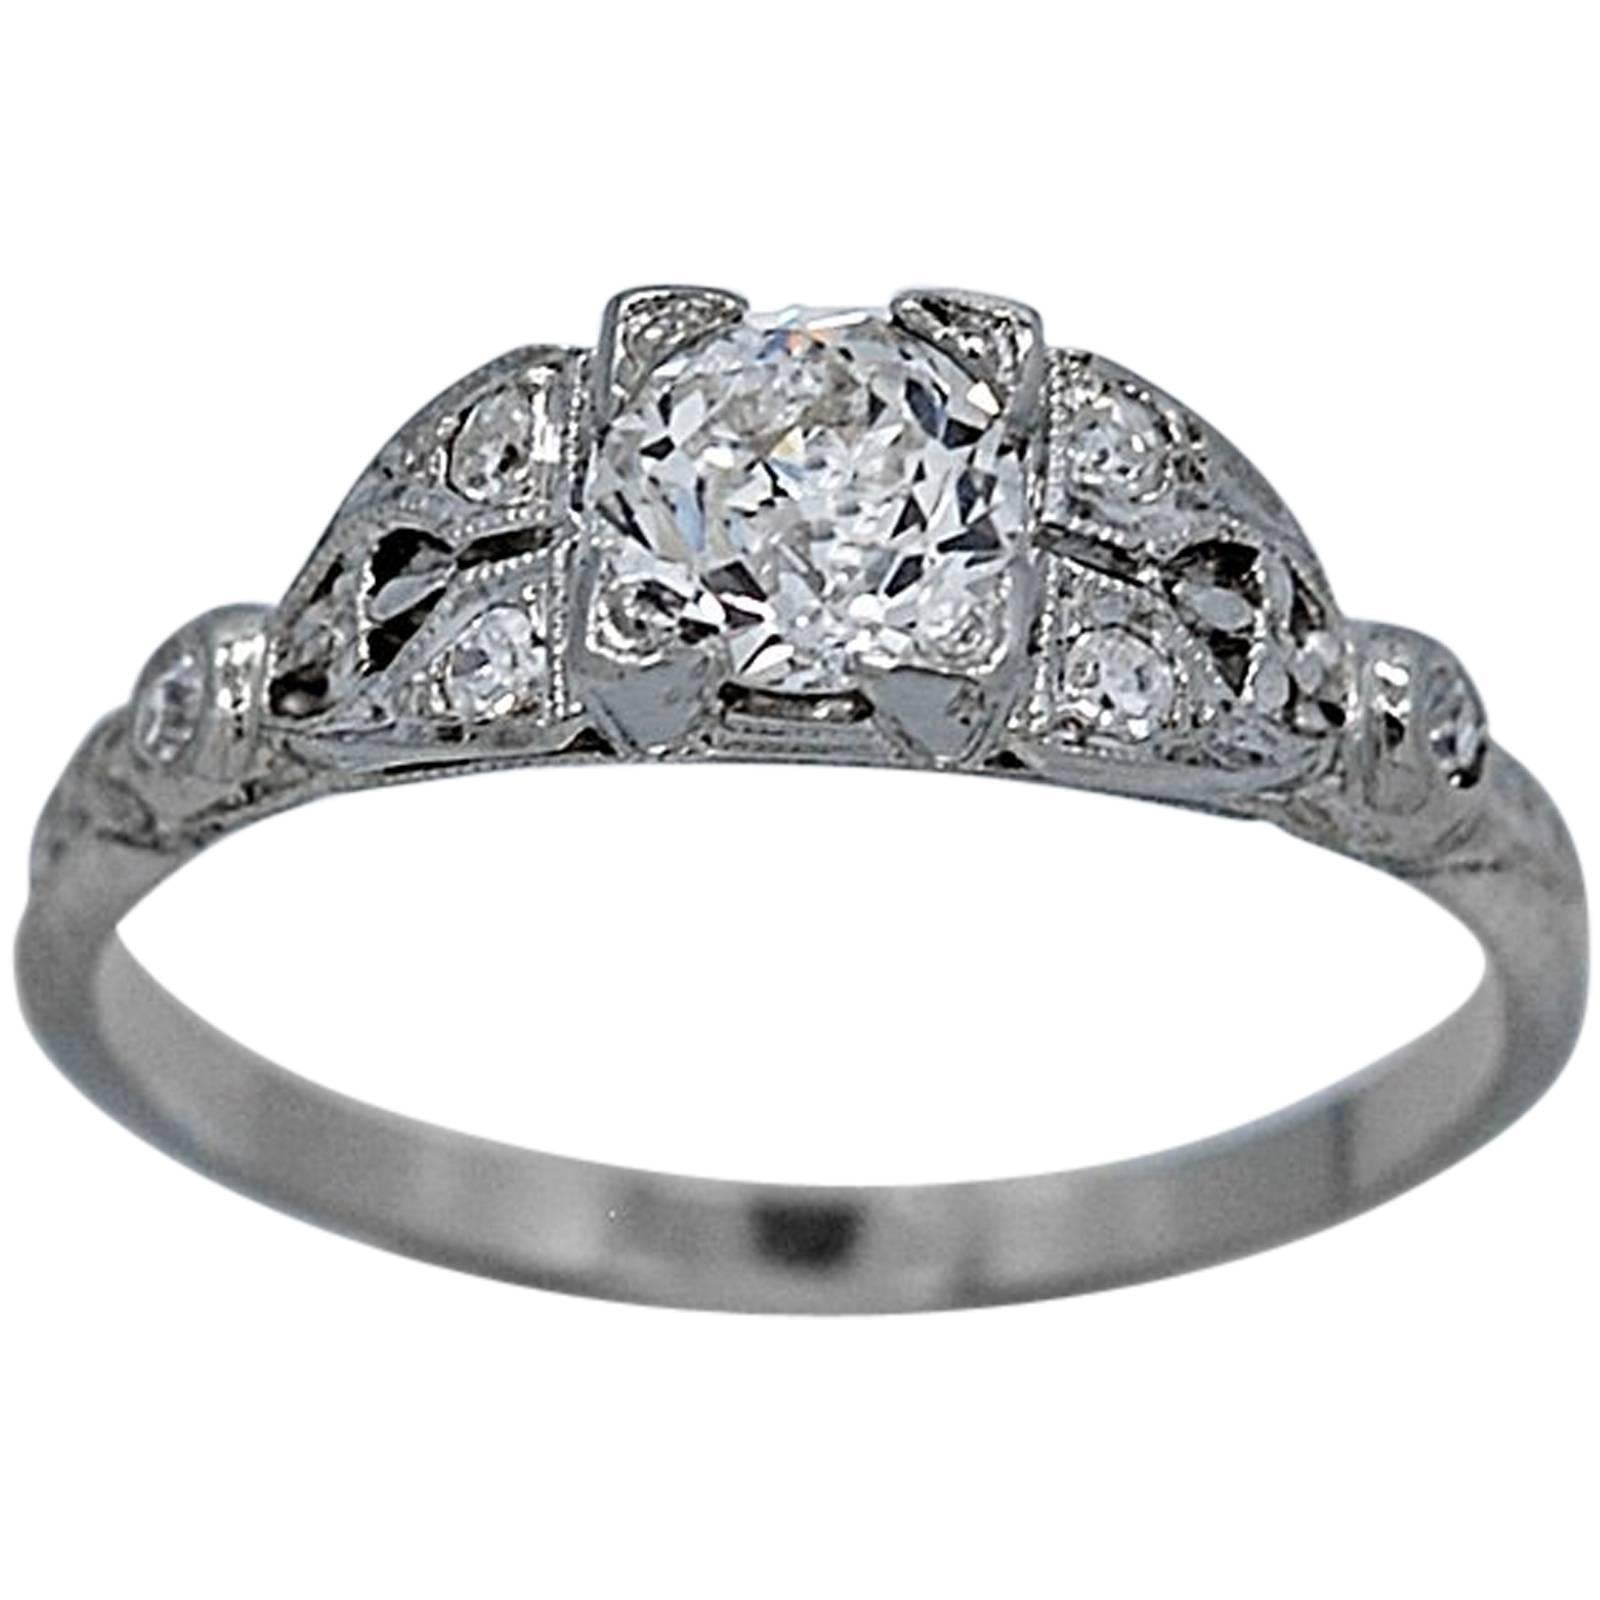 Antique .50 carat Diamond Gold Engagement Ring 